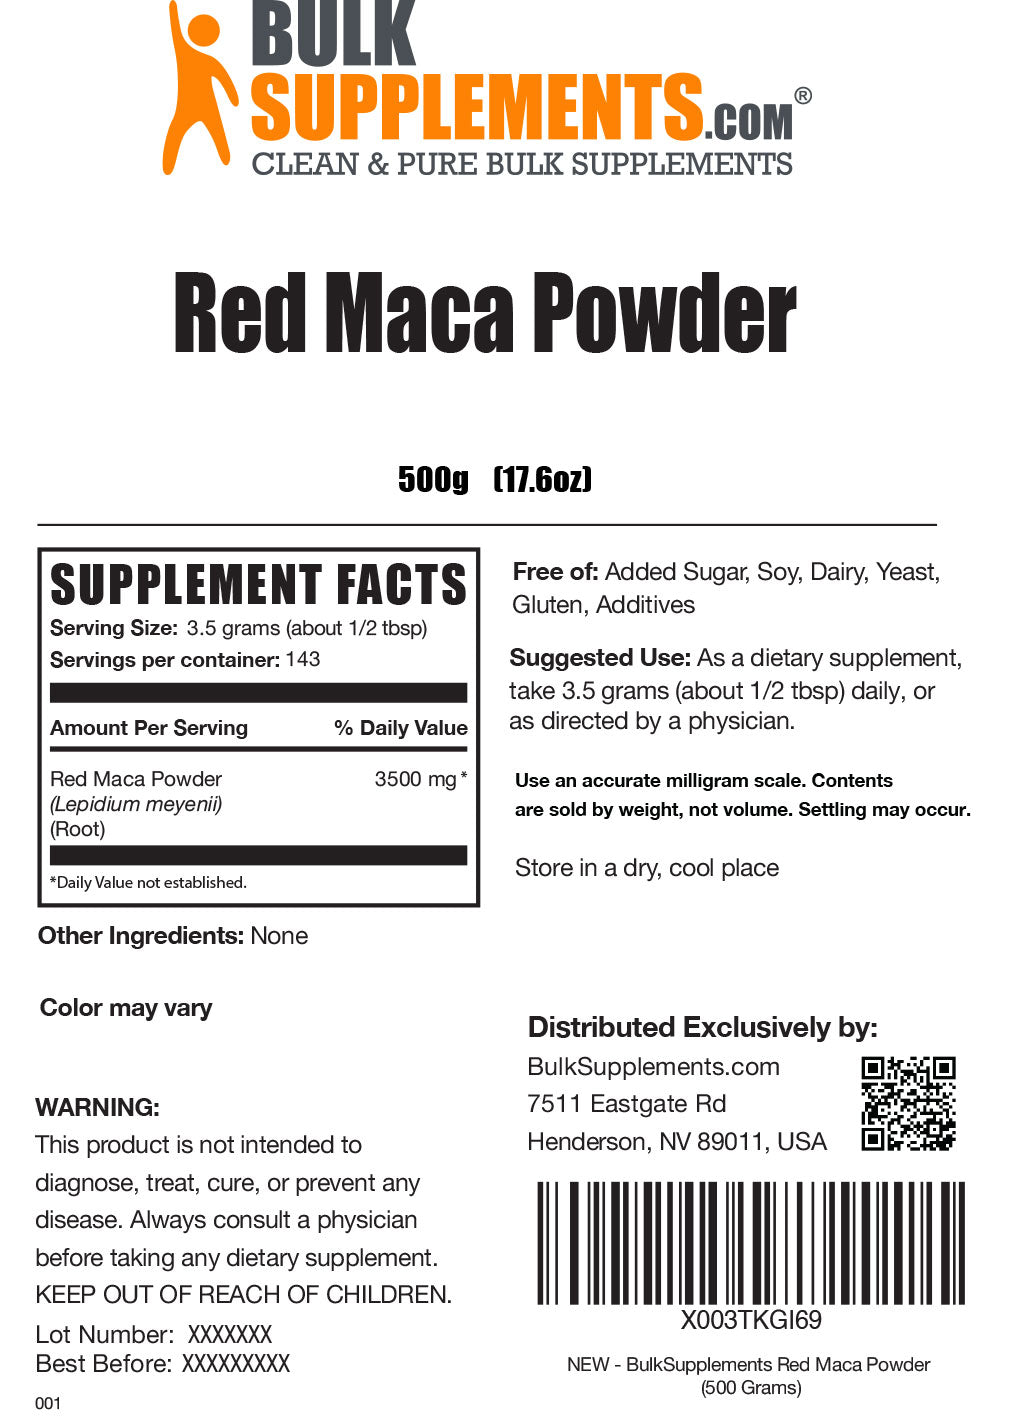 Red maca powder label 500g